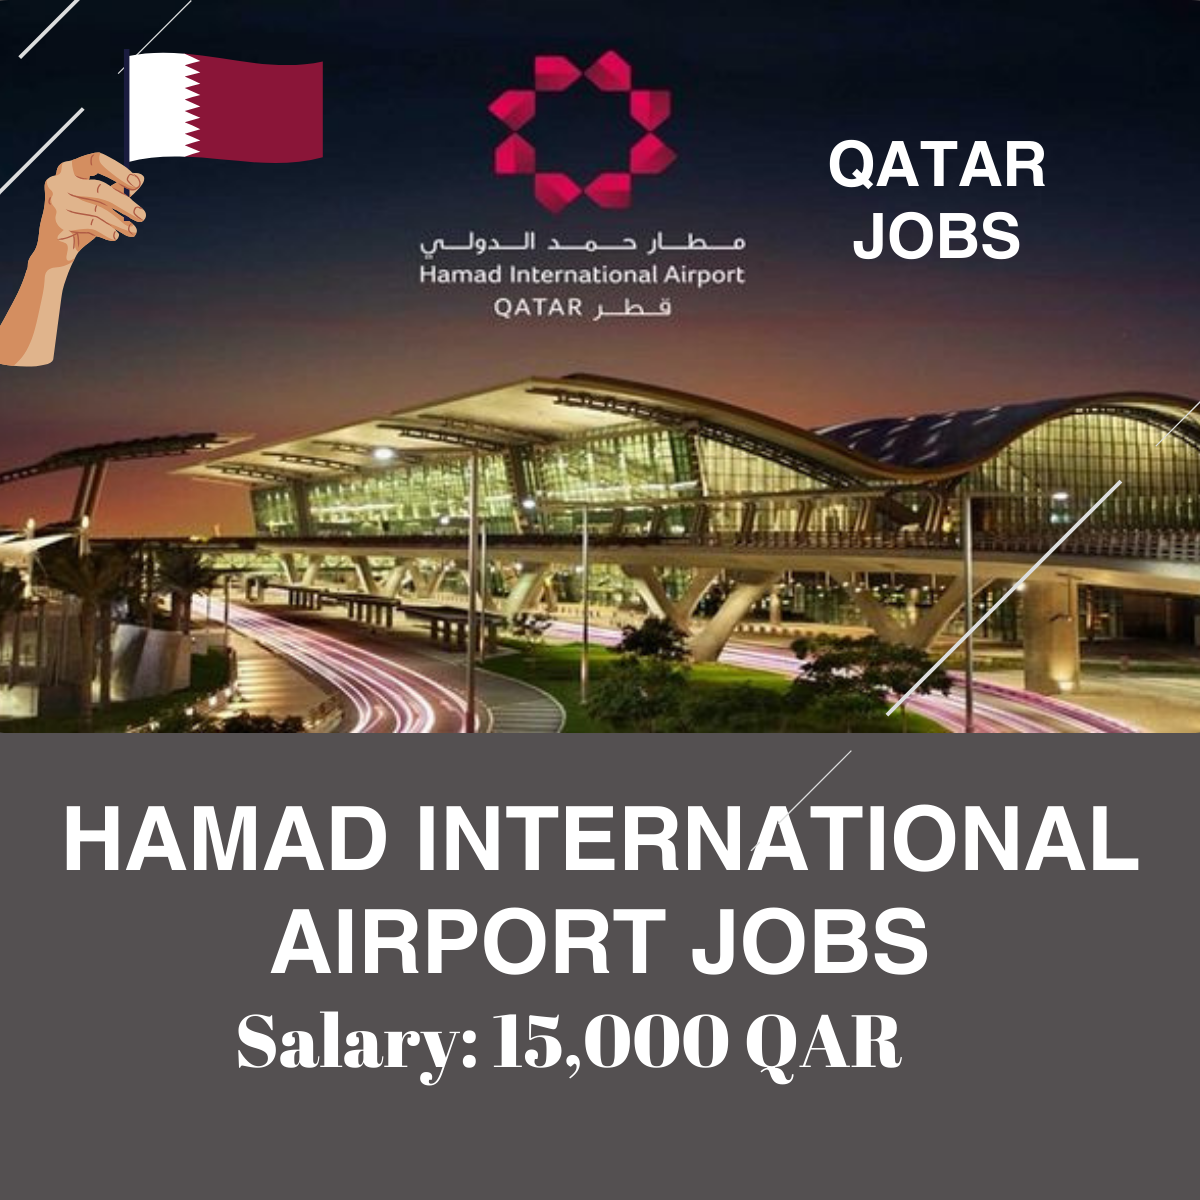 Hamad International Airport jobs (salaries reach 15,000 QAR)